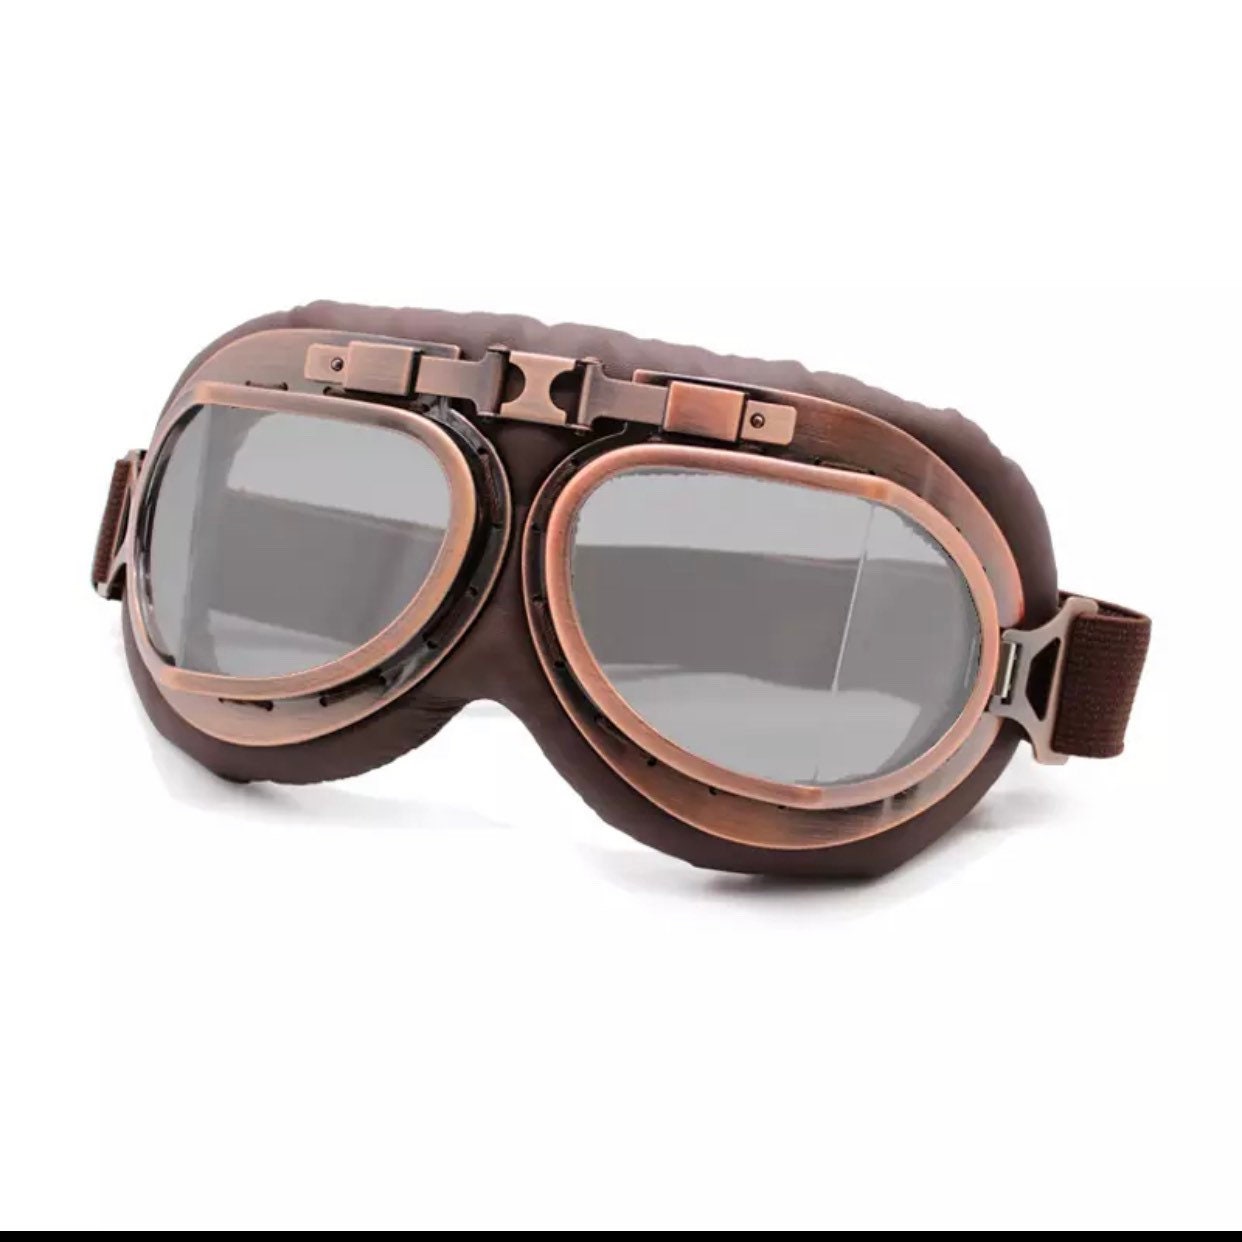 Antique / Vintage Distressed Goggles Safety Glasses Accessoires Zonnebrillen & Eyewear Sportbrillen Oddity Military Aviation Mad Max Motorcycle Steampunk 